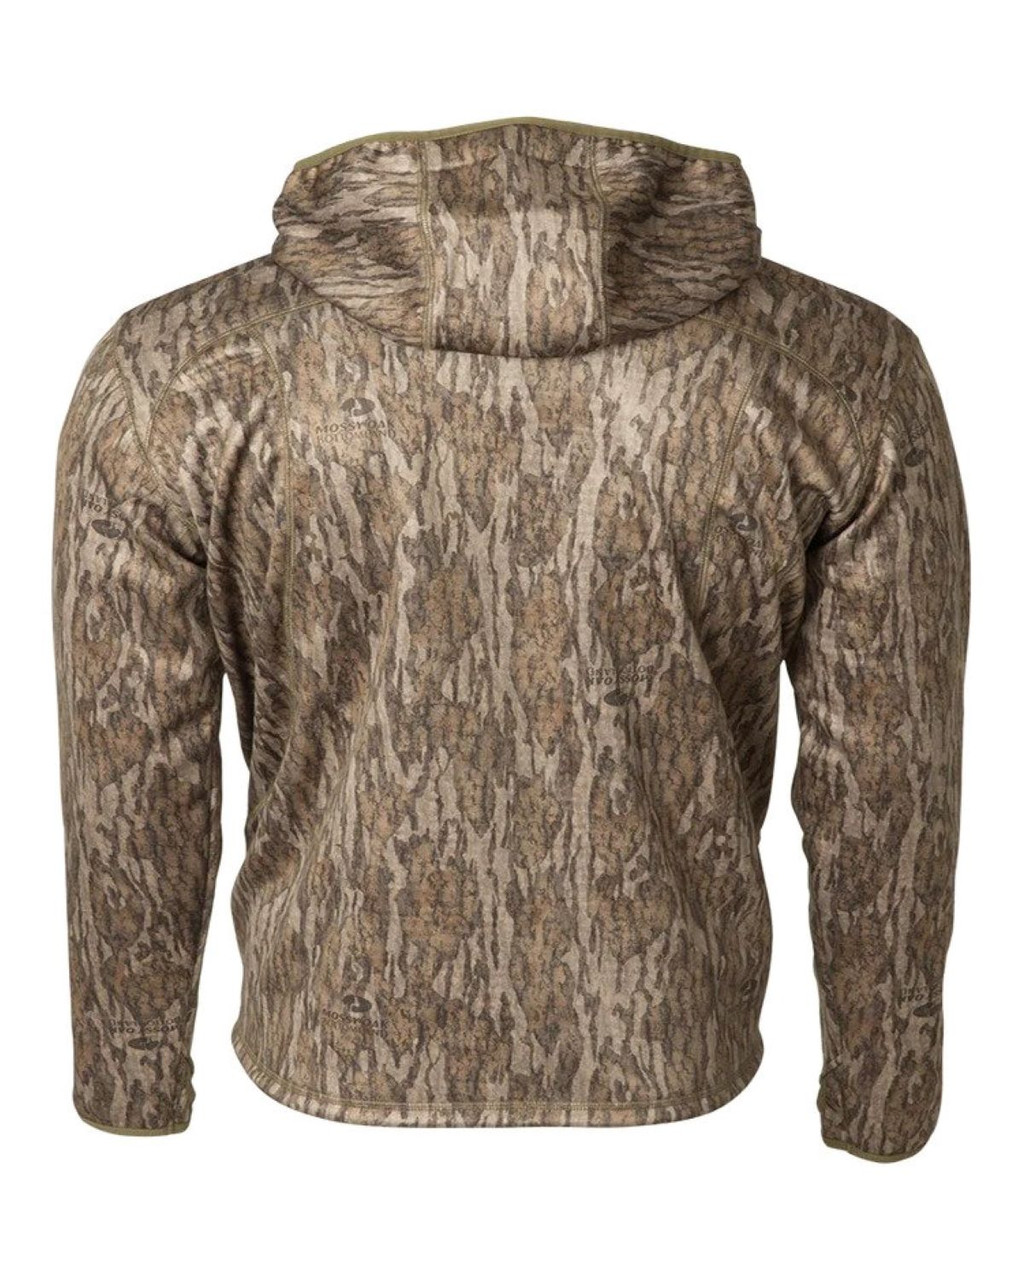 Banded Hooded Mid-Layer Fleece Pullover Bottomland Medium - B1010061-BL-M